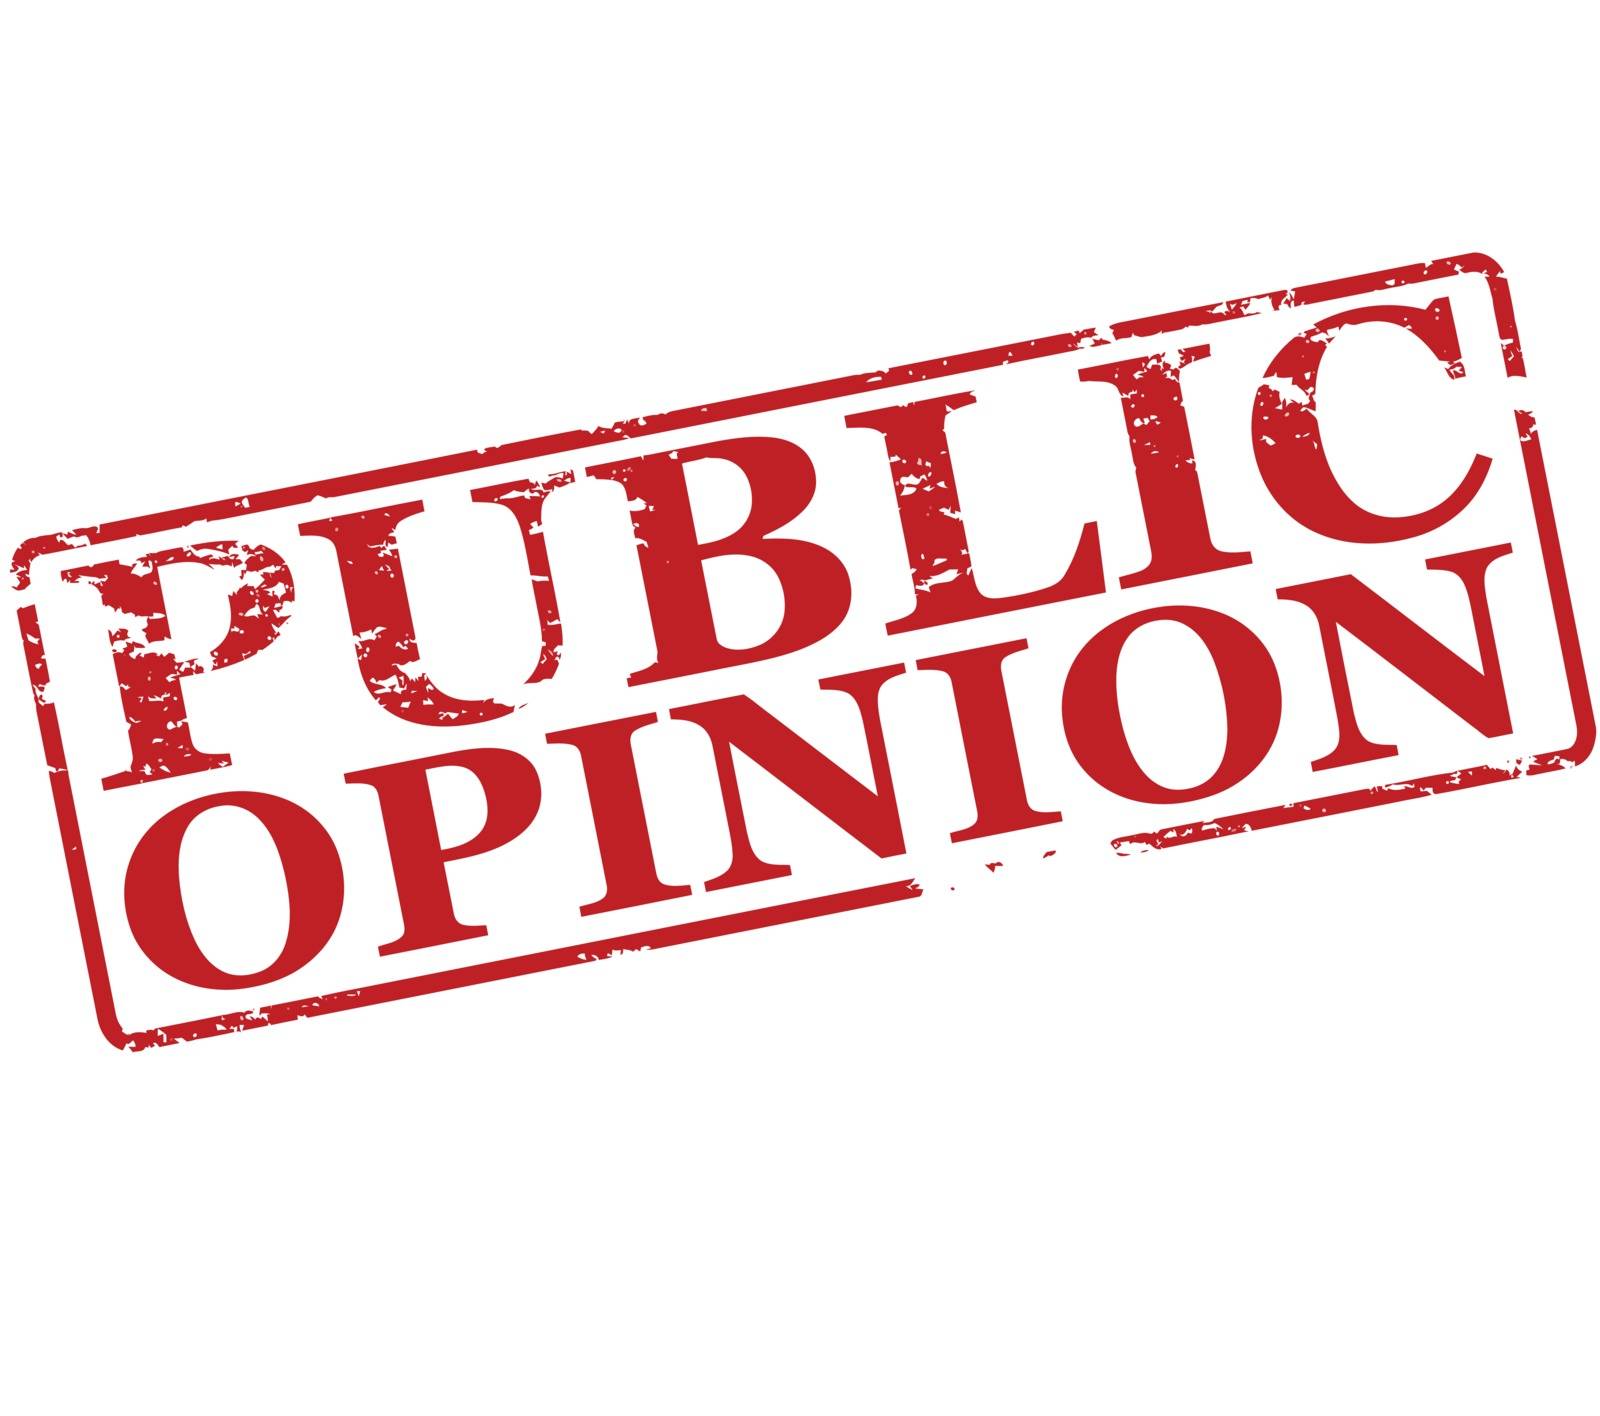 Public opinion by carmenbobo